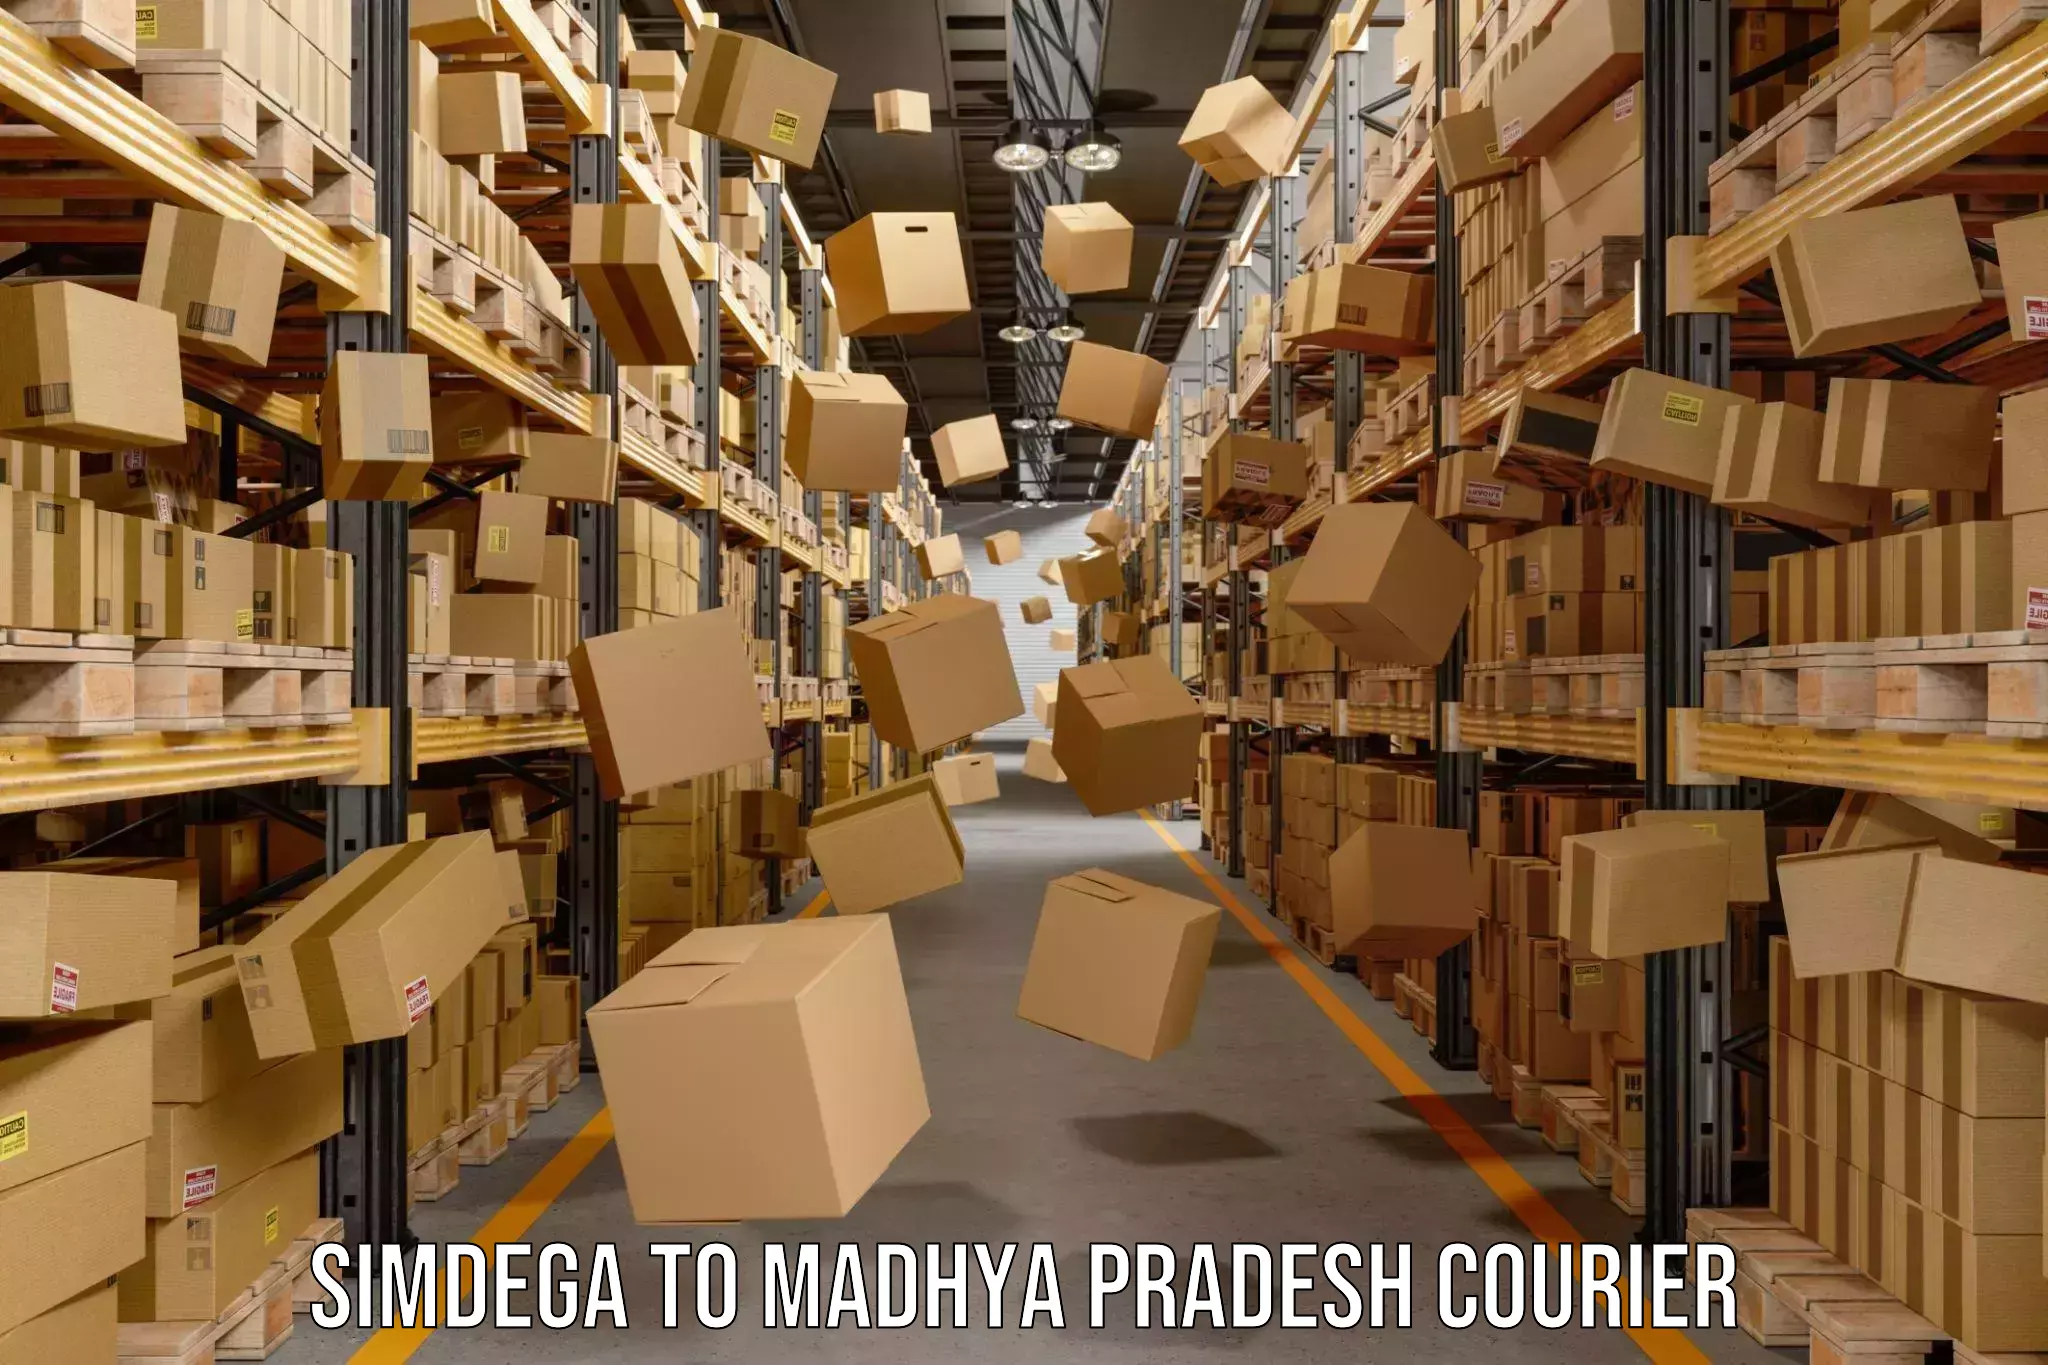 Advanced tracking systems Simdega to Madhya Pradesh